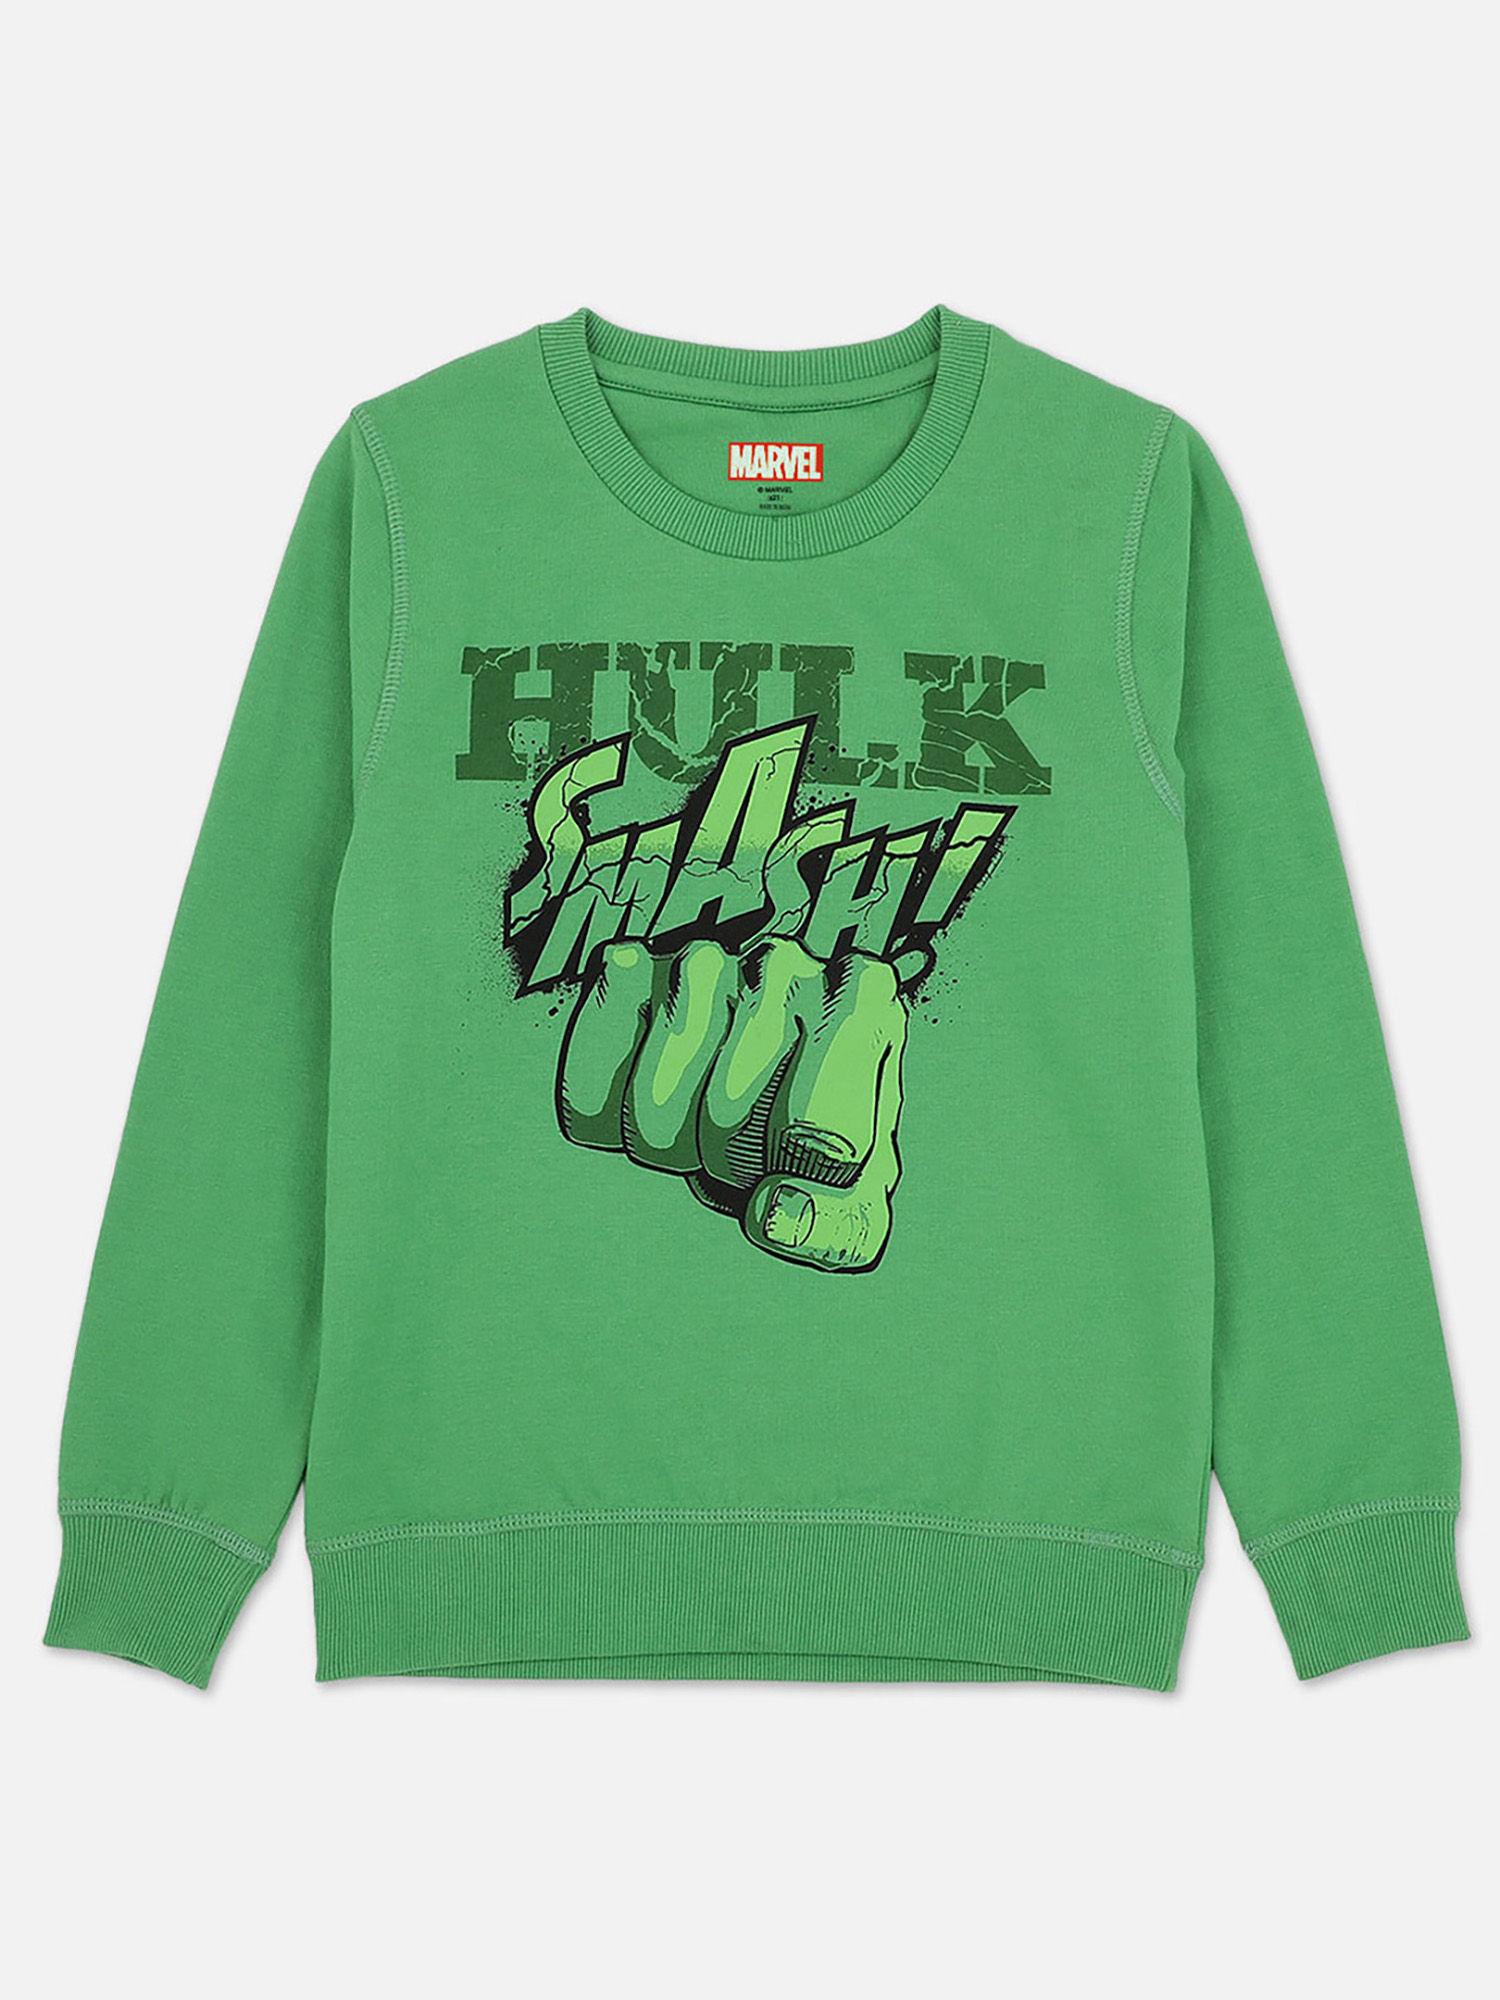 hulk featured sweatshirt for boys